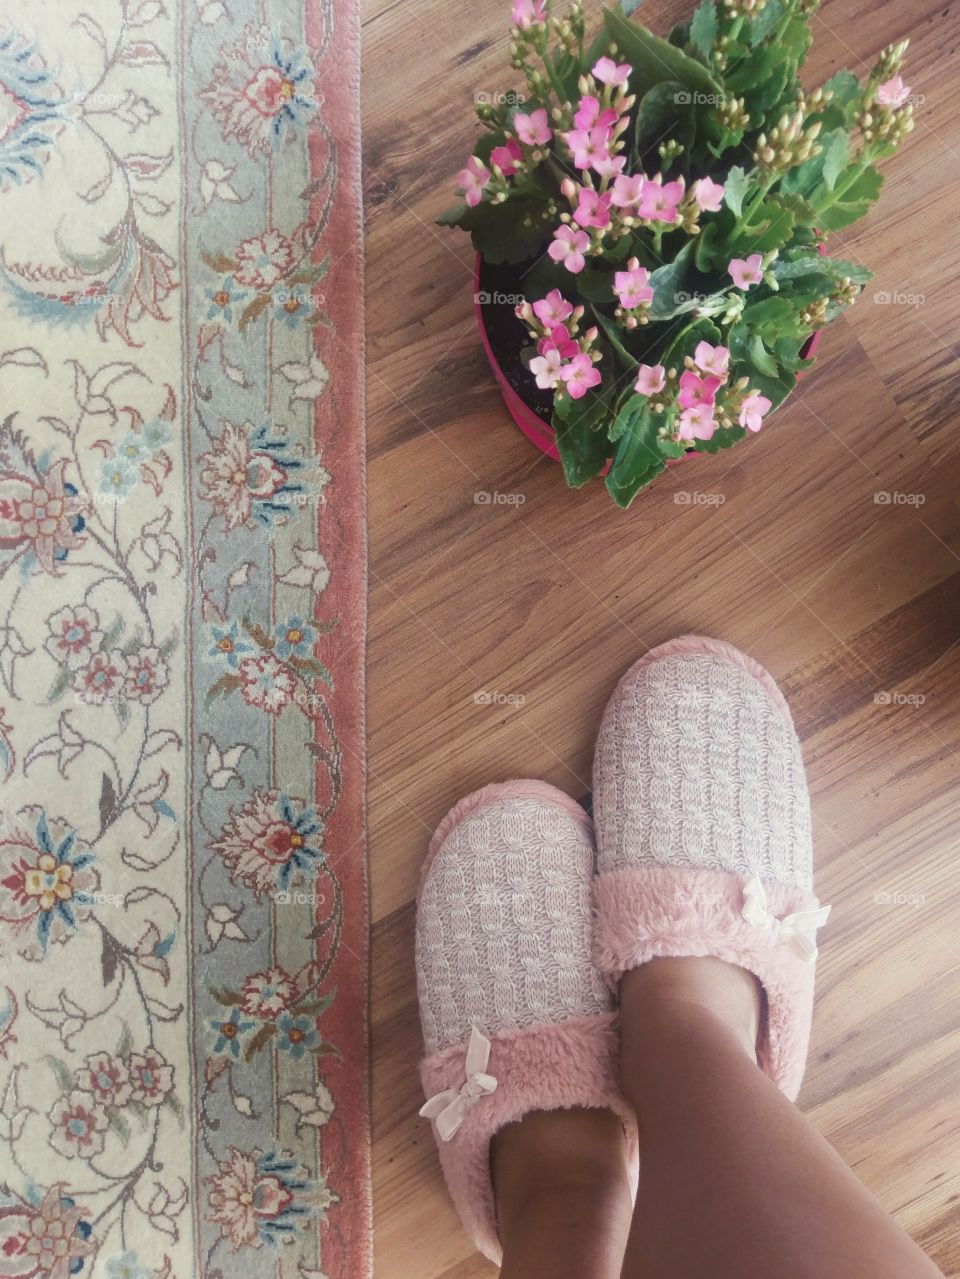 My lovely new slippers ❤